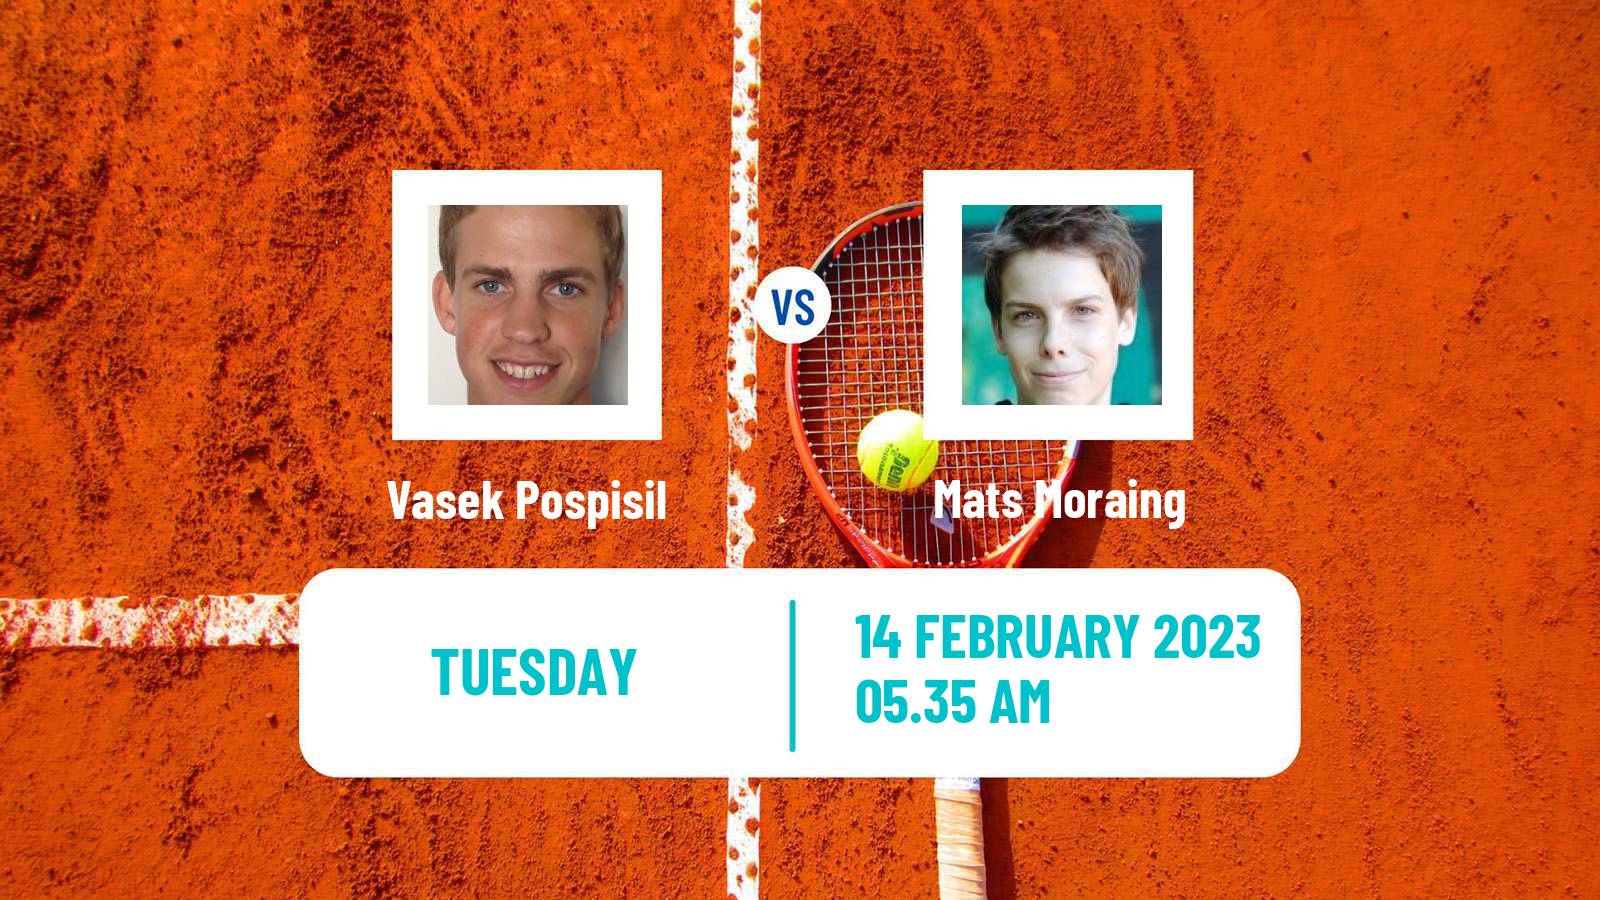 Tennis ATP Challenger Vasek Pospisil - Mats Moraing